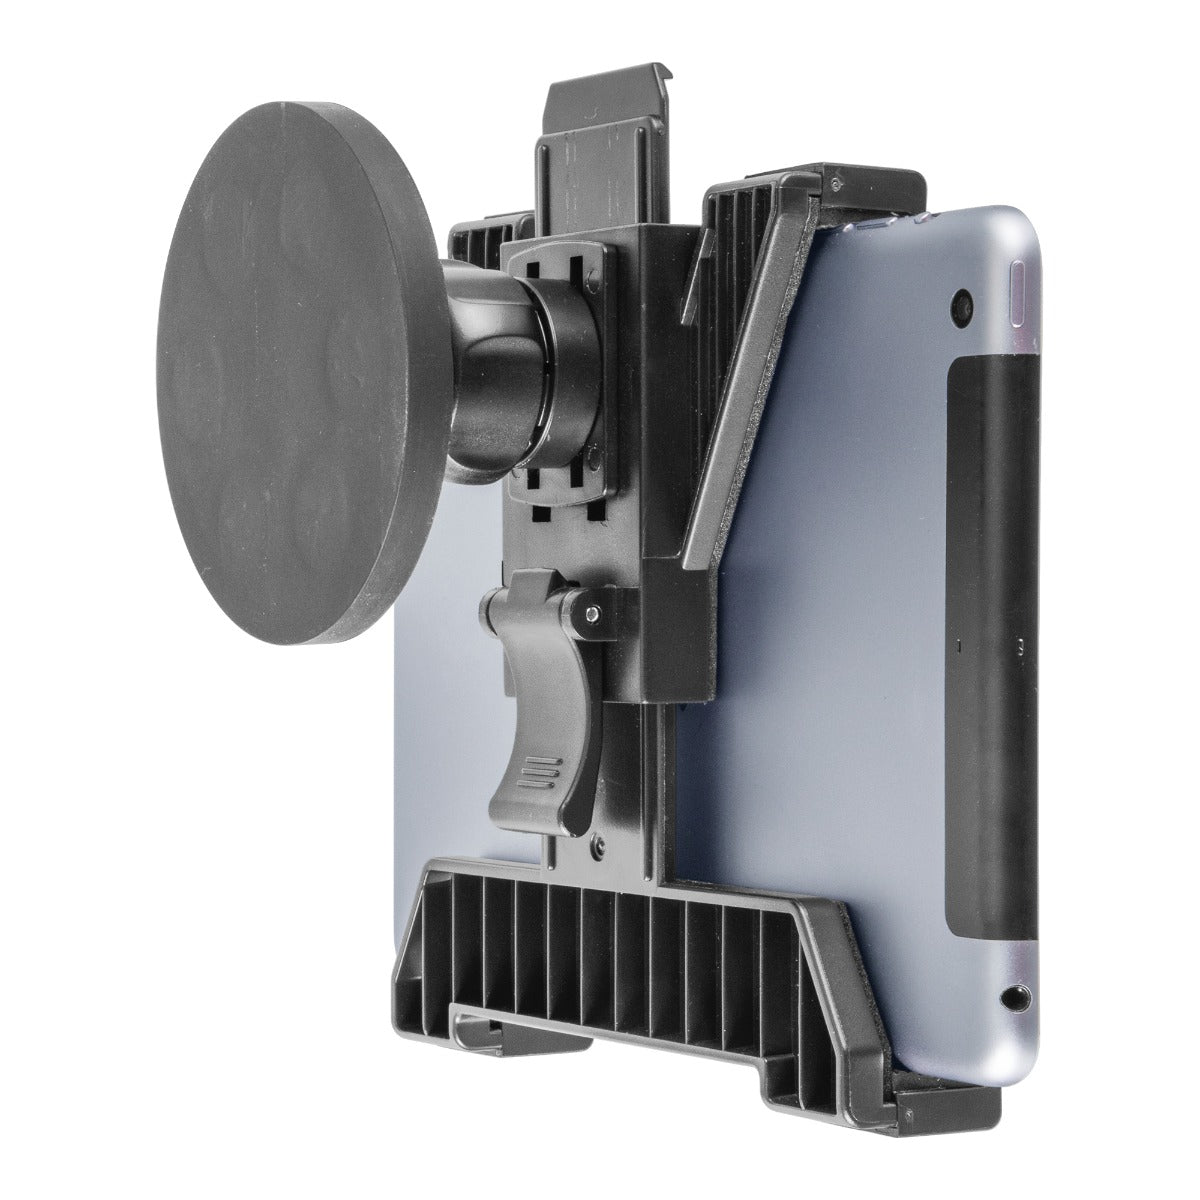 iBOLT TabDock™ MagDock- Heavy Duty Magnetic Mount for All 7”-10” Tablets- Great for fridges, Restaurants, Automotive, Workout Equipment